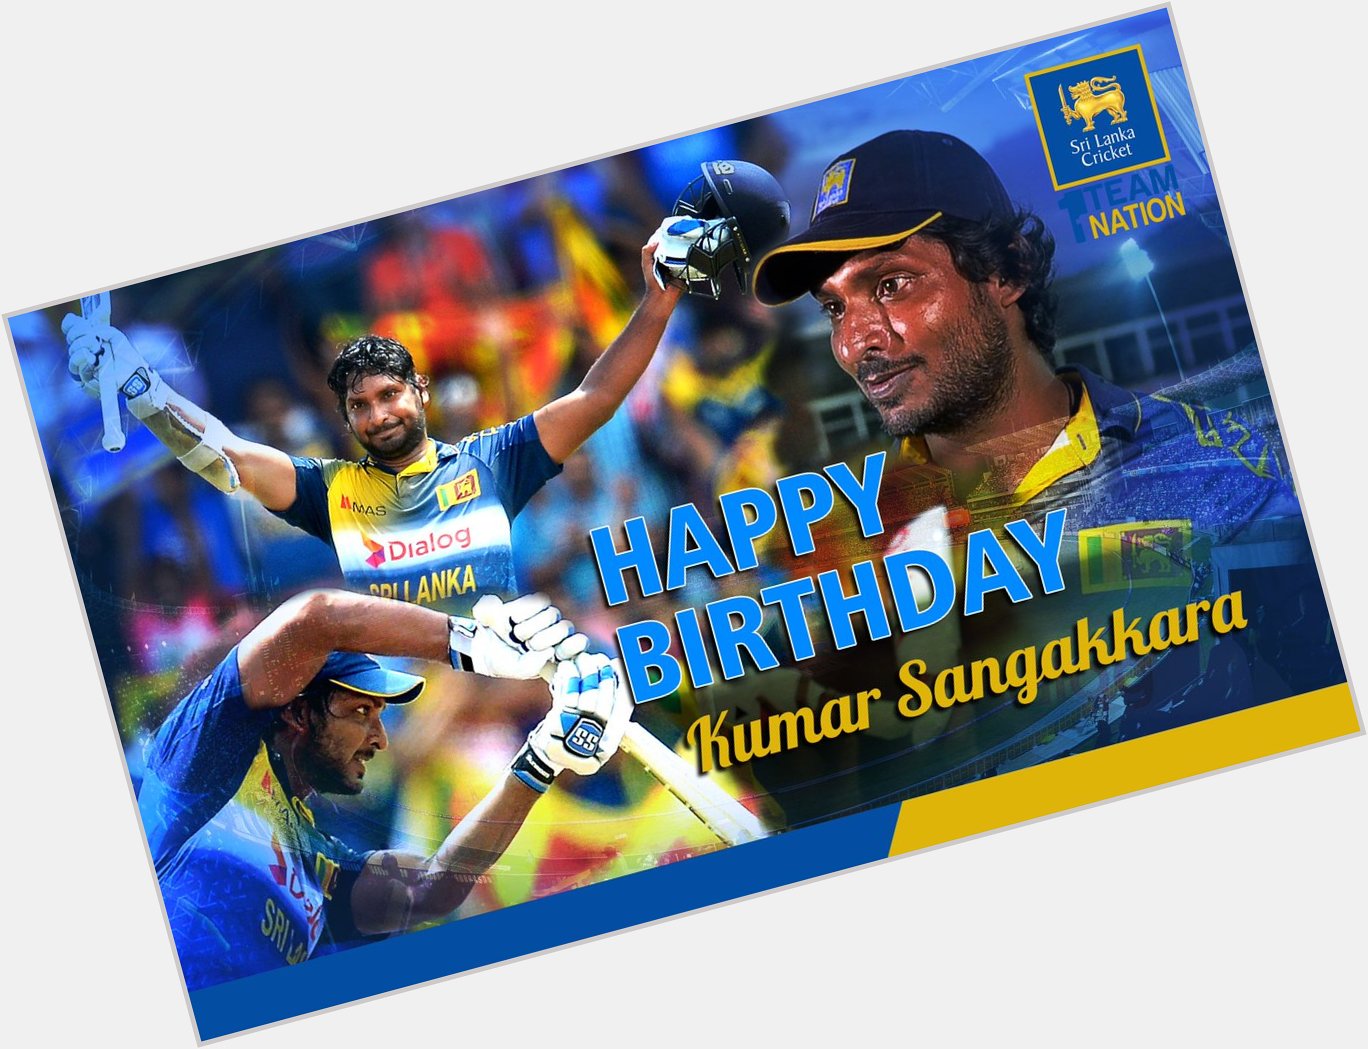 Happy Birthday to one of the greatest batsman of all time, Kumar Sangakkara!
Love you Jaani
From   